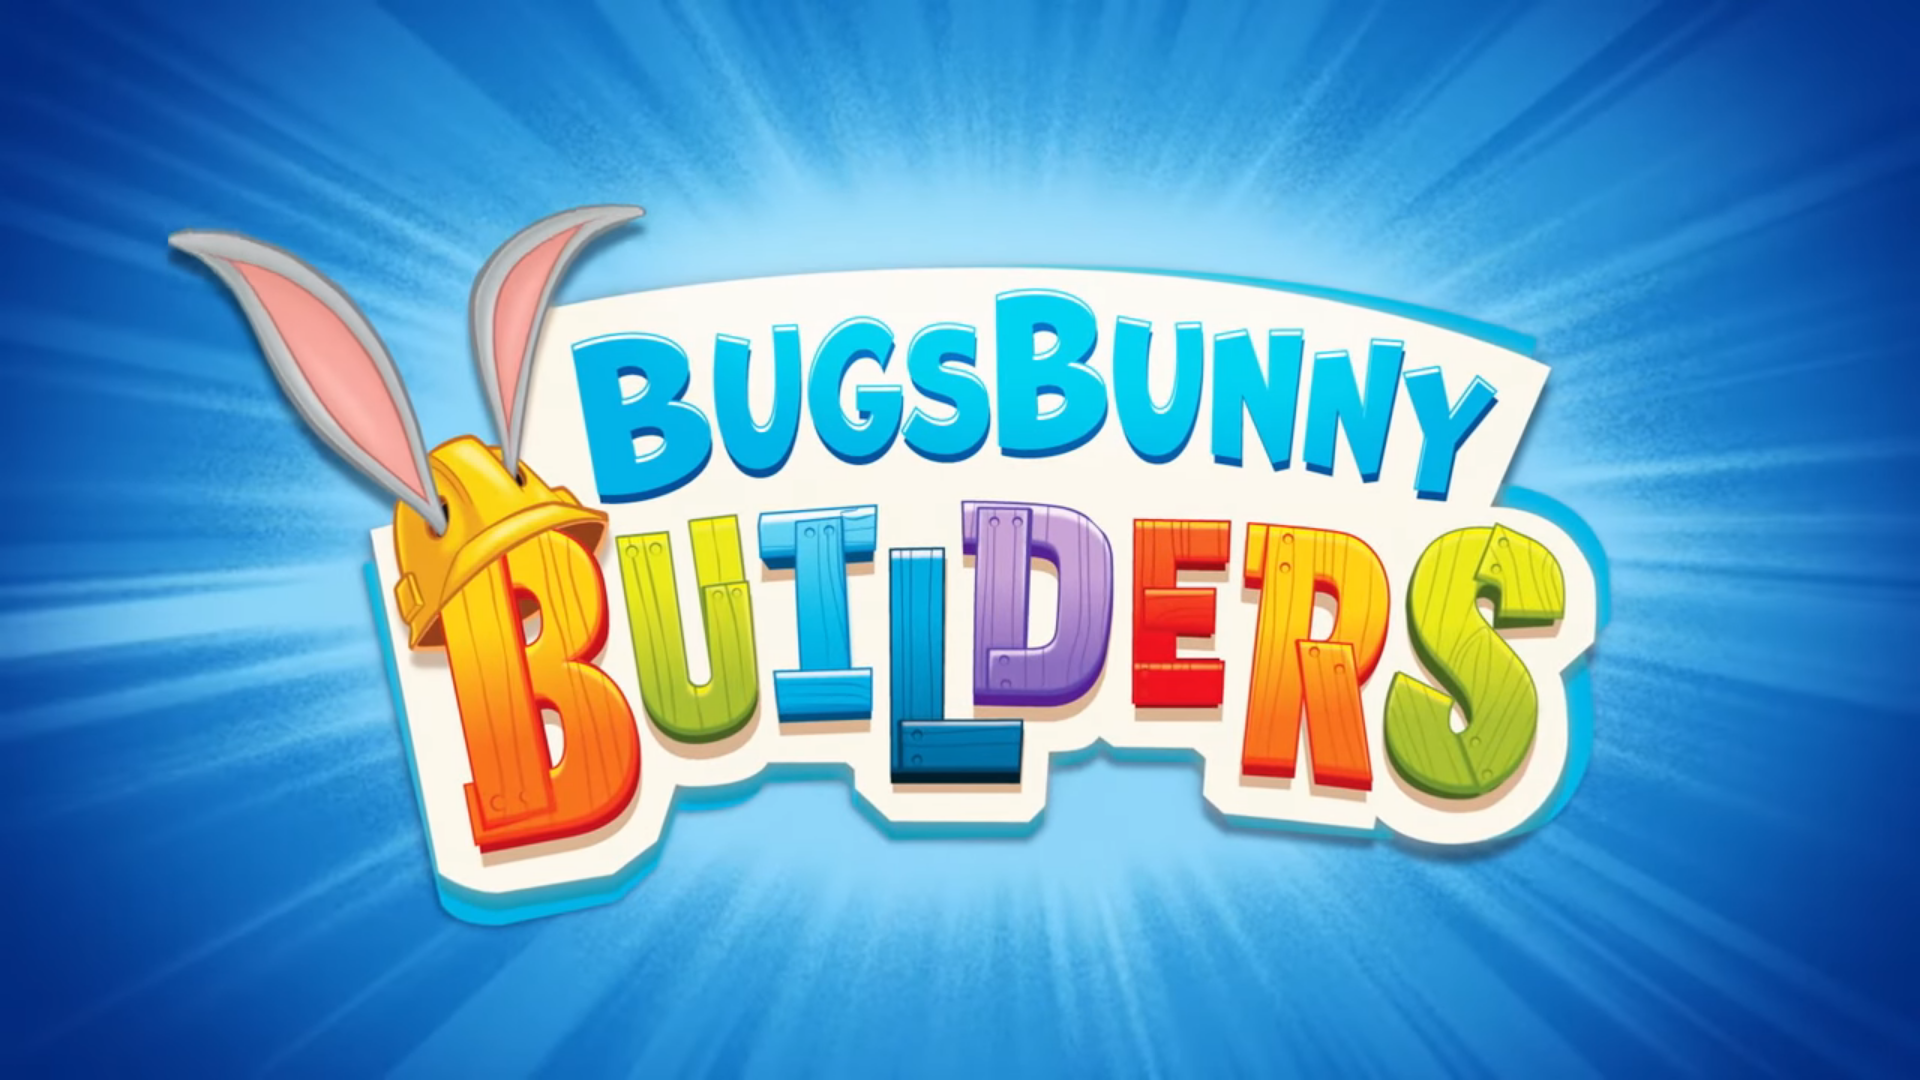 bugs bunny font